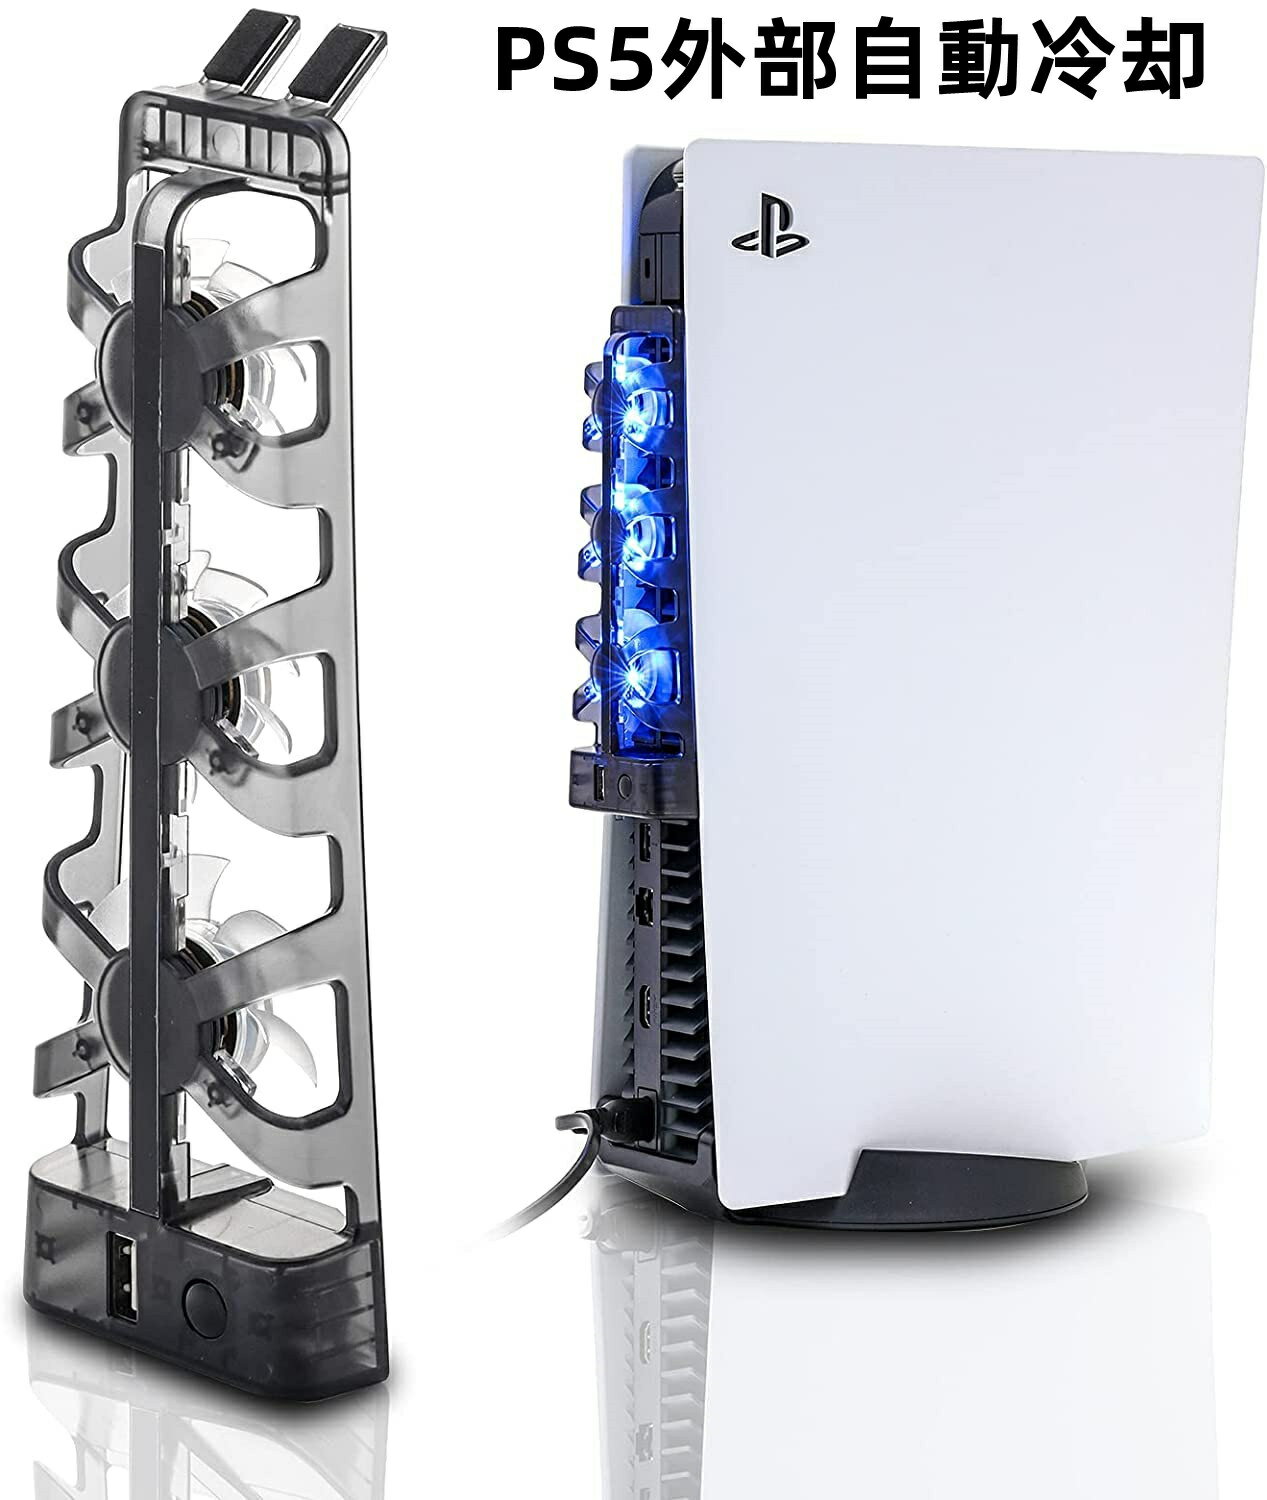 PS5 冷却ファン PS5外部自動冷却 USBターボクーラー 3つファン 静音 装着簡単 熱対策 省スペース USBポート PlayStat…